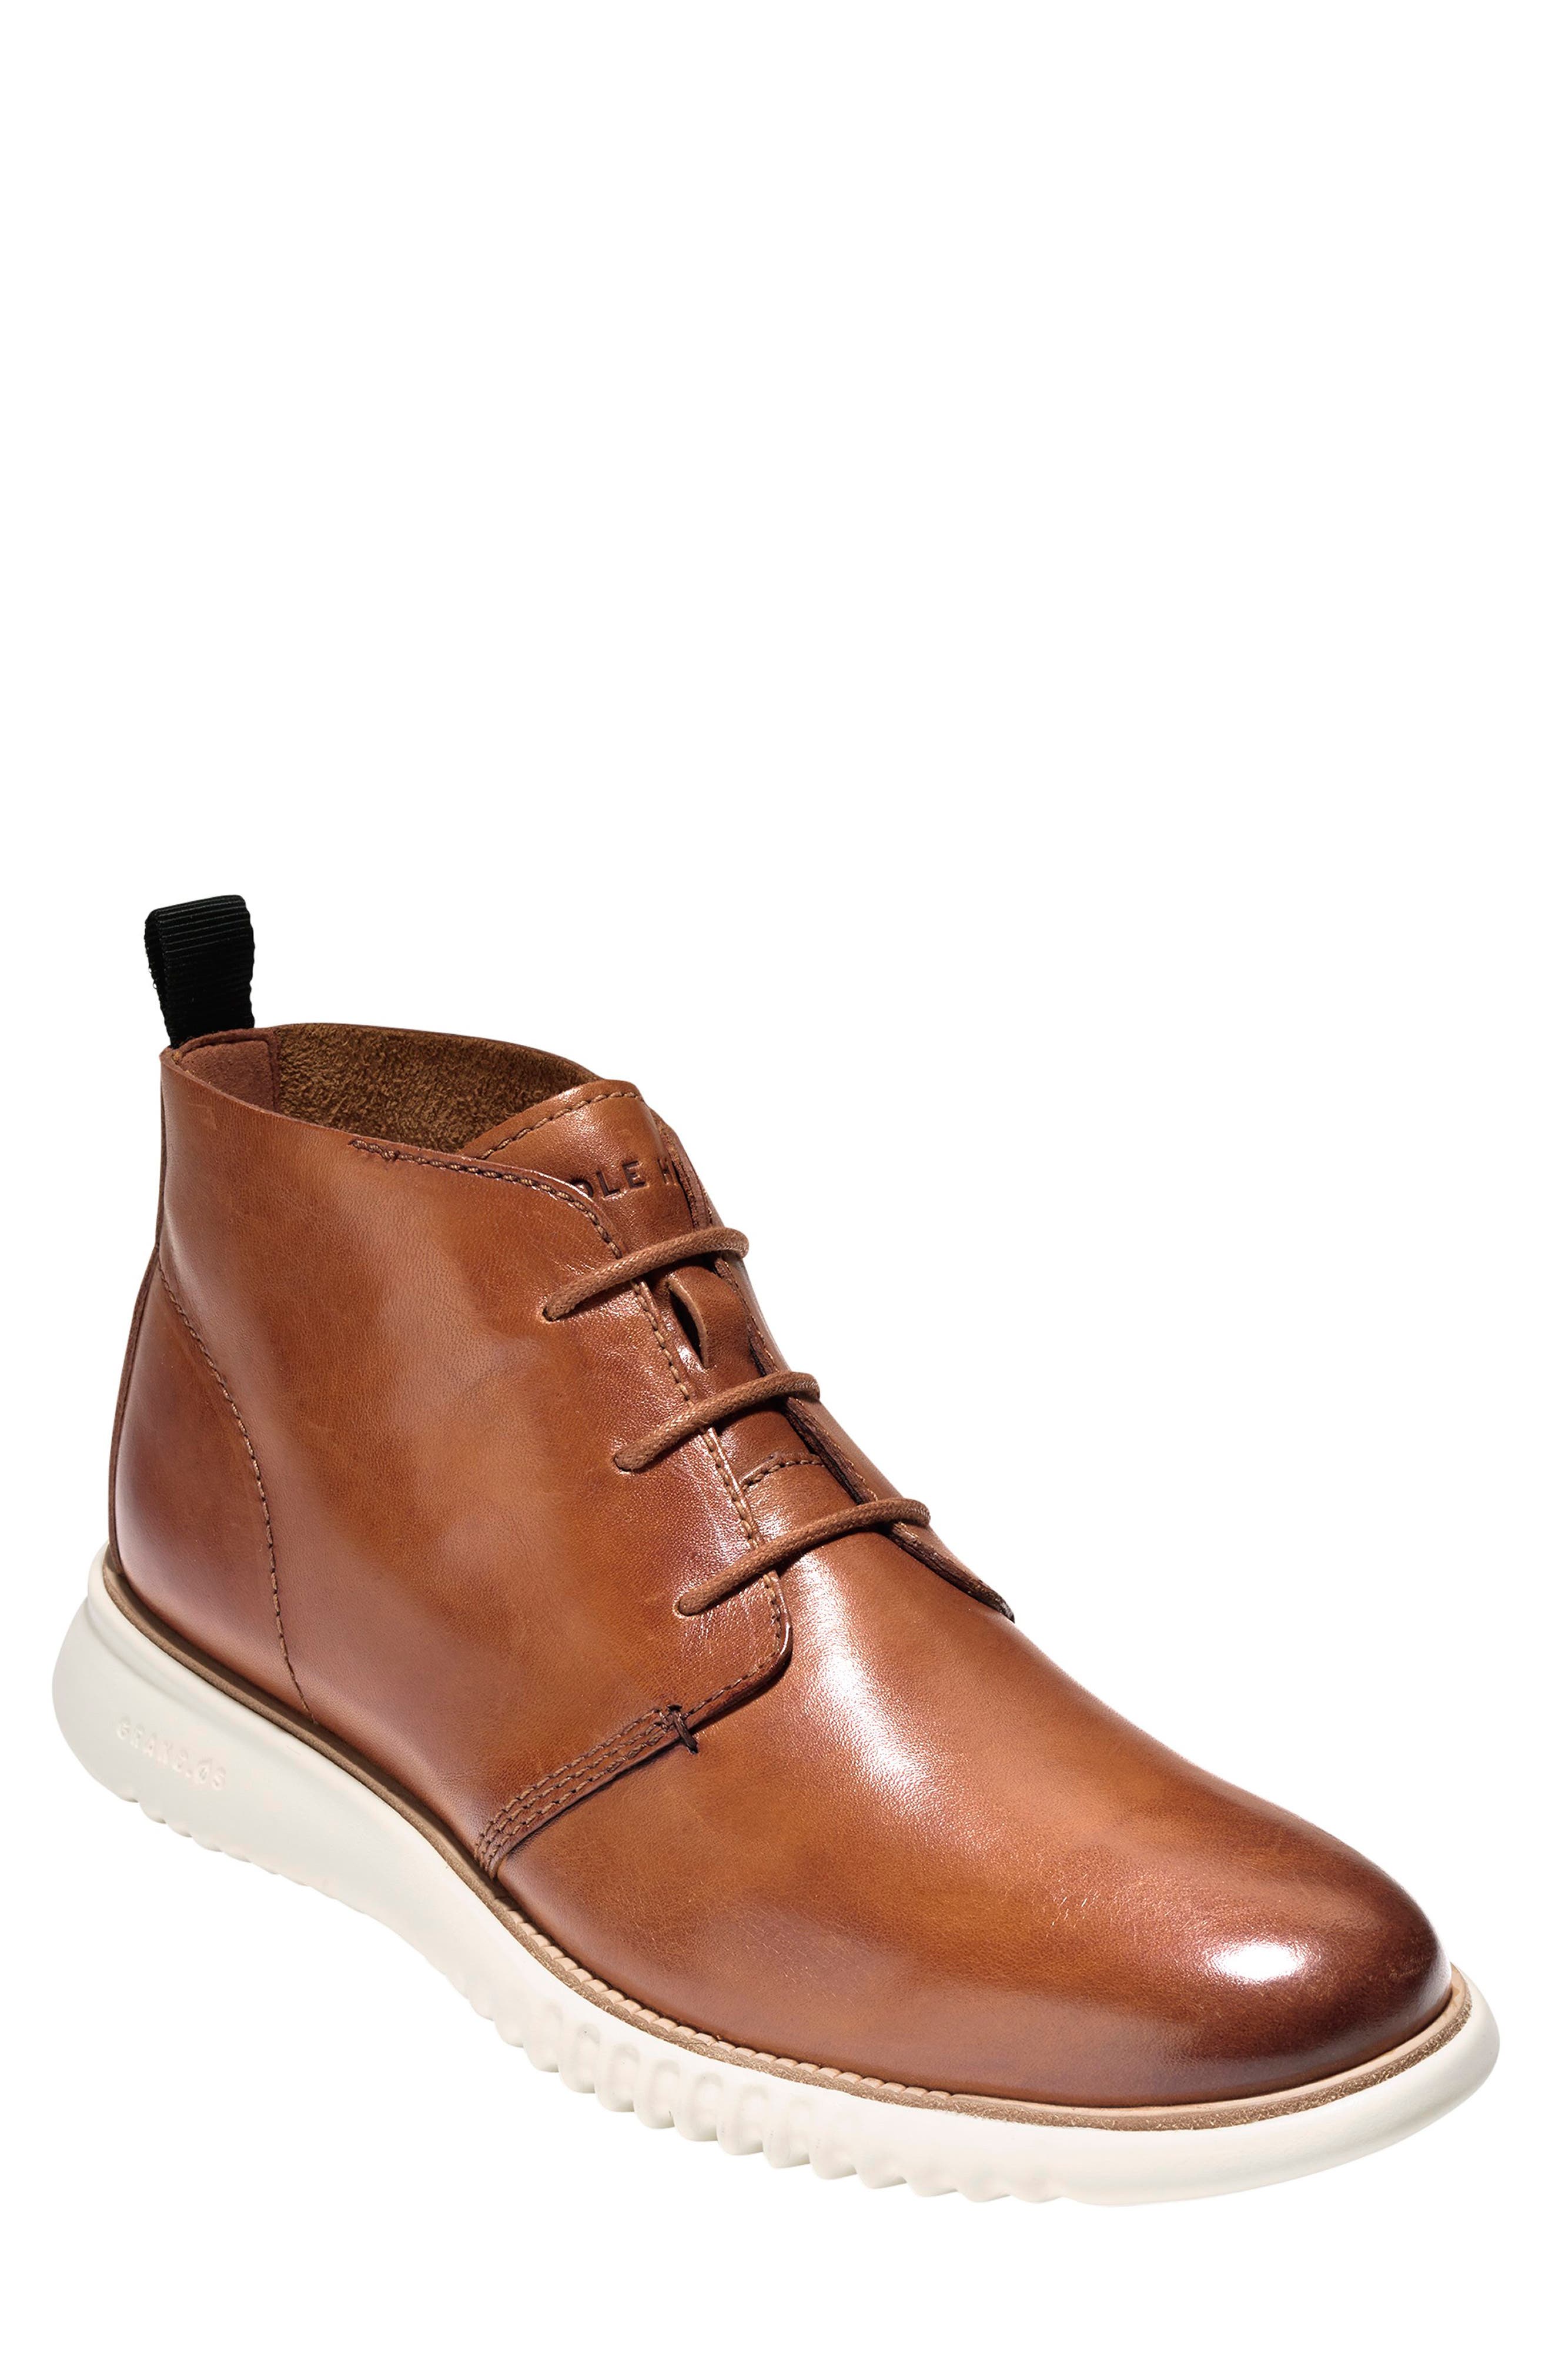 Men's Shoes Sale \u0026 Clearance | Nordstrom